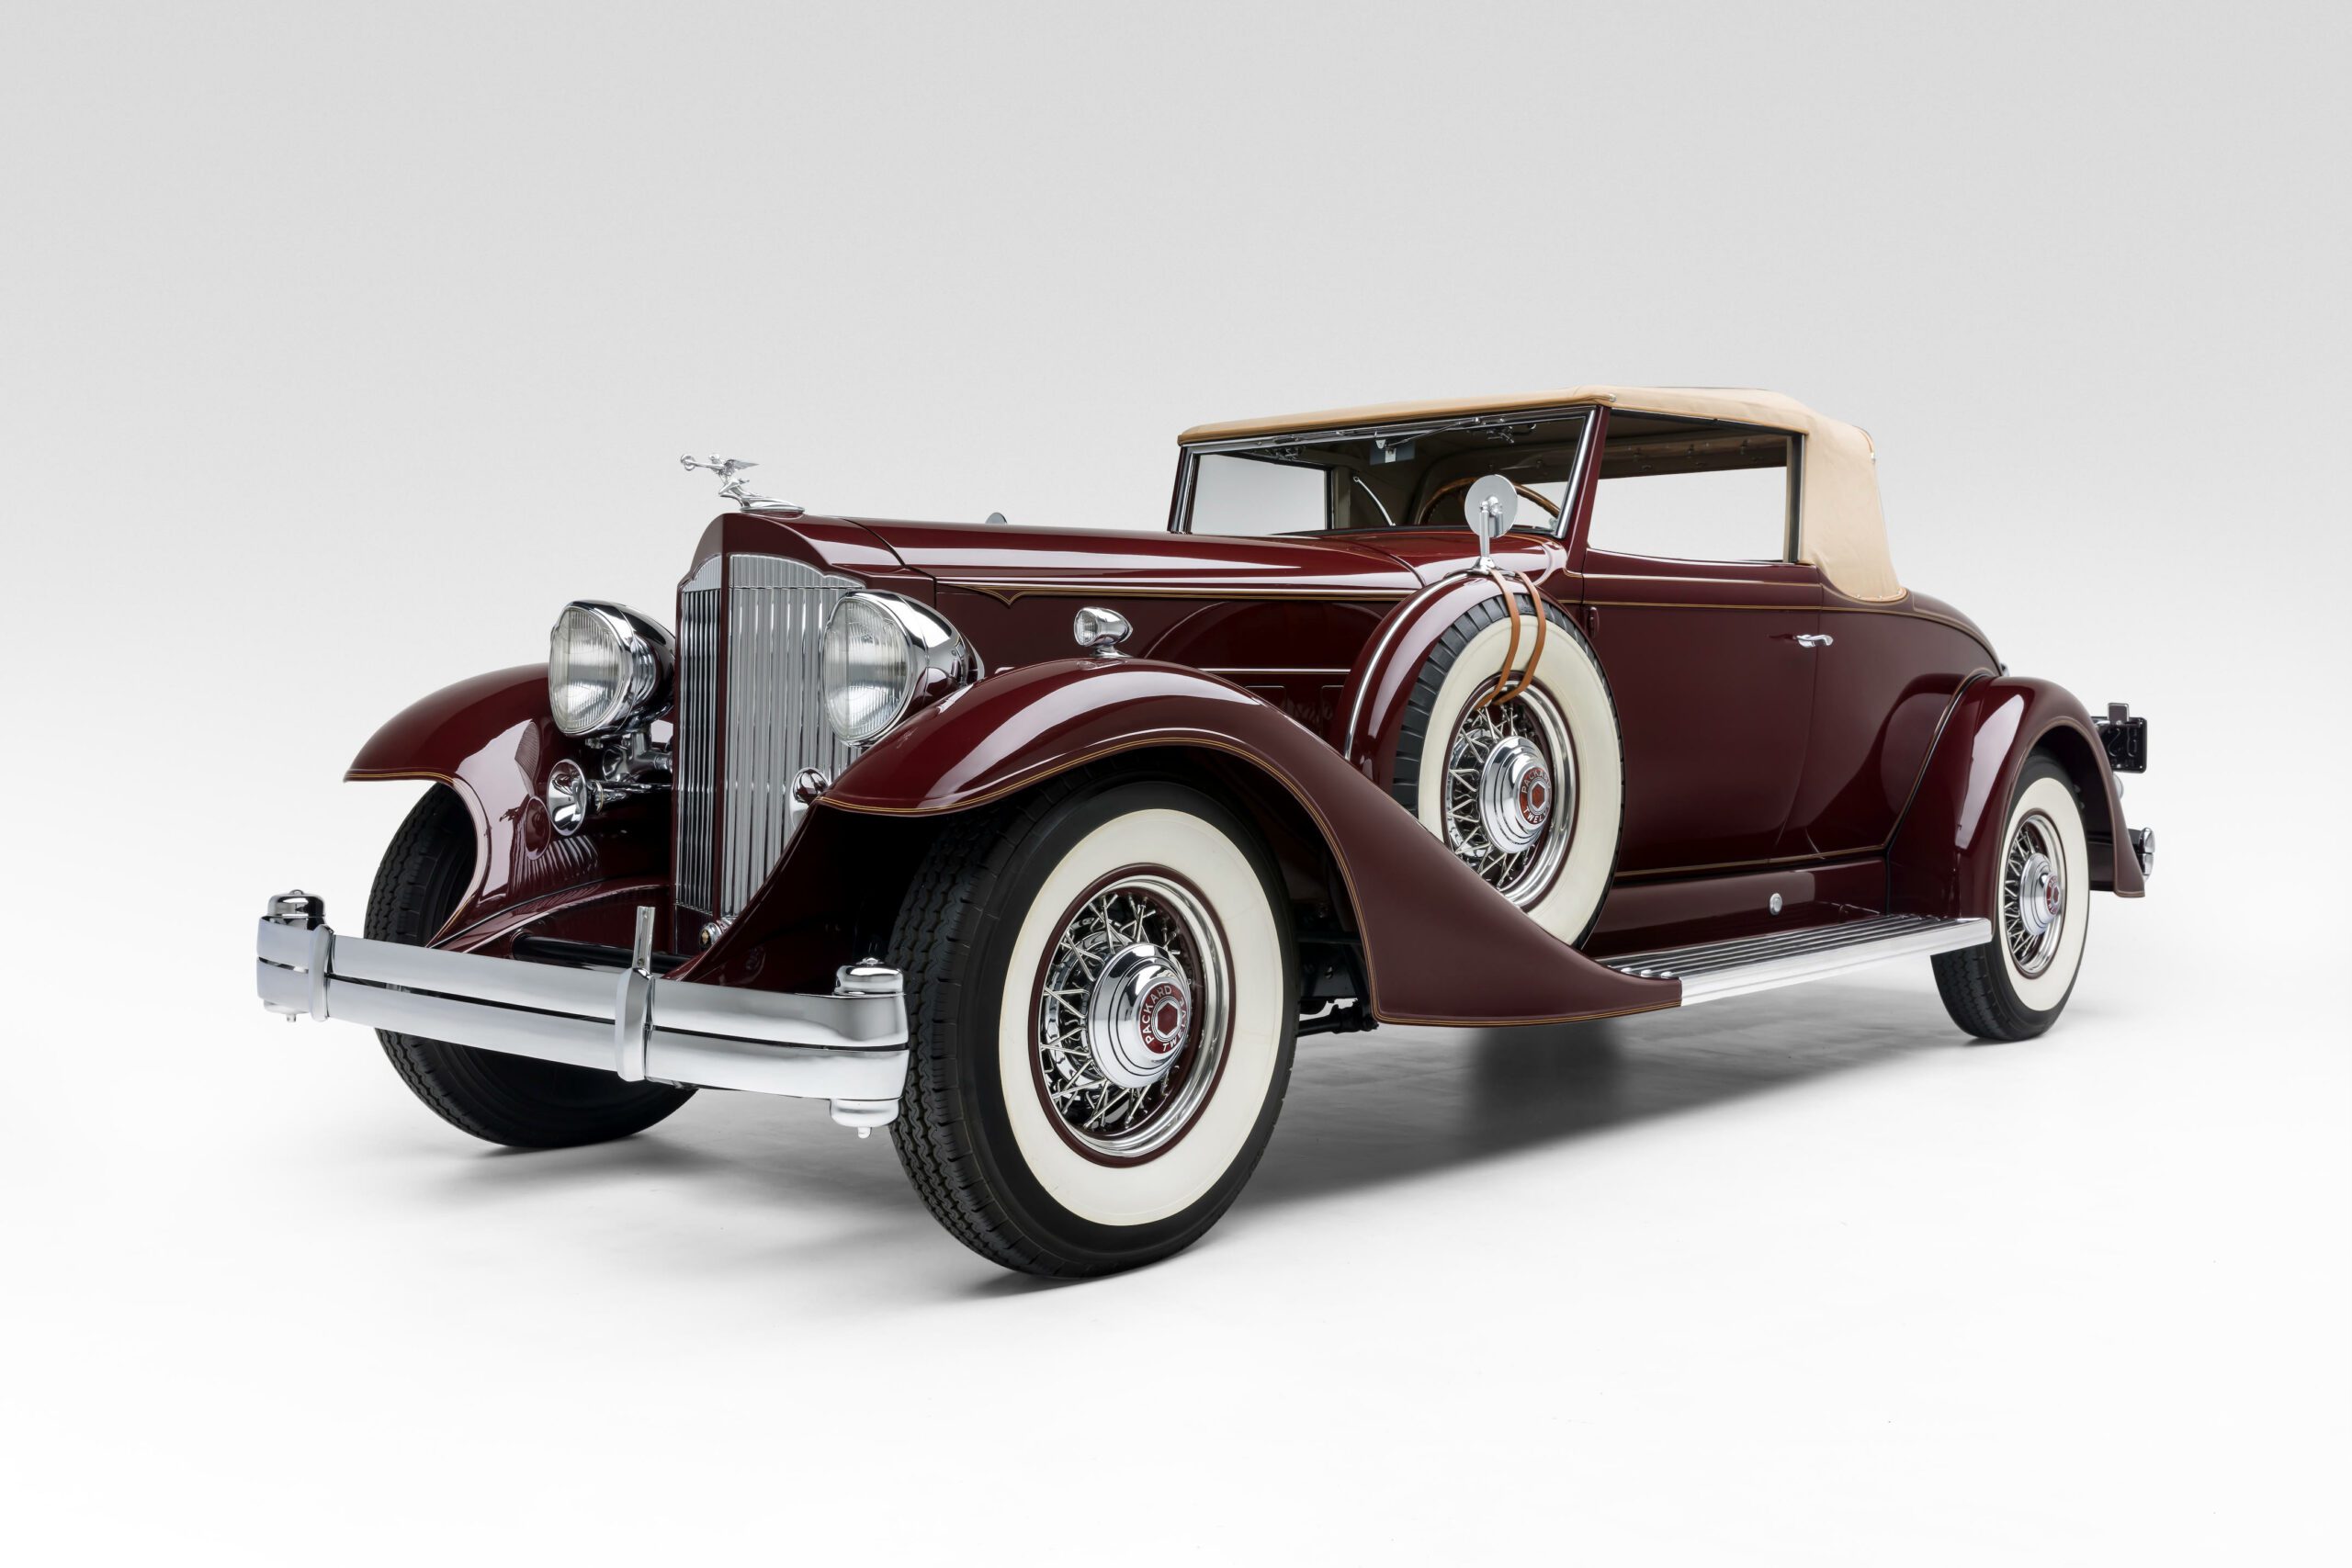 1933 Packard Twelve Model 1005 Coupe Roadster, Packard, Packard Twelve